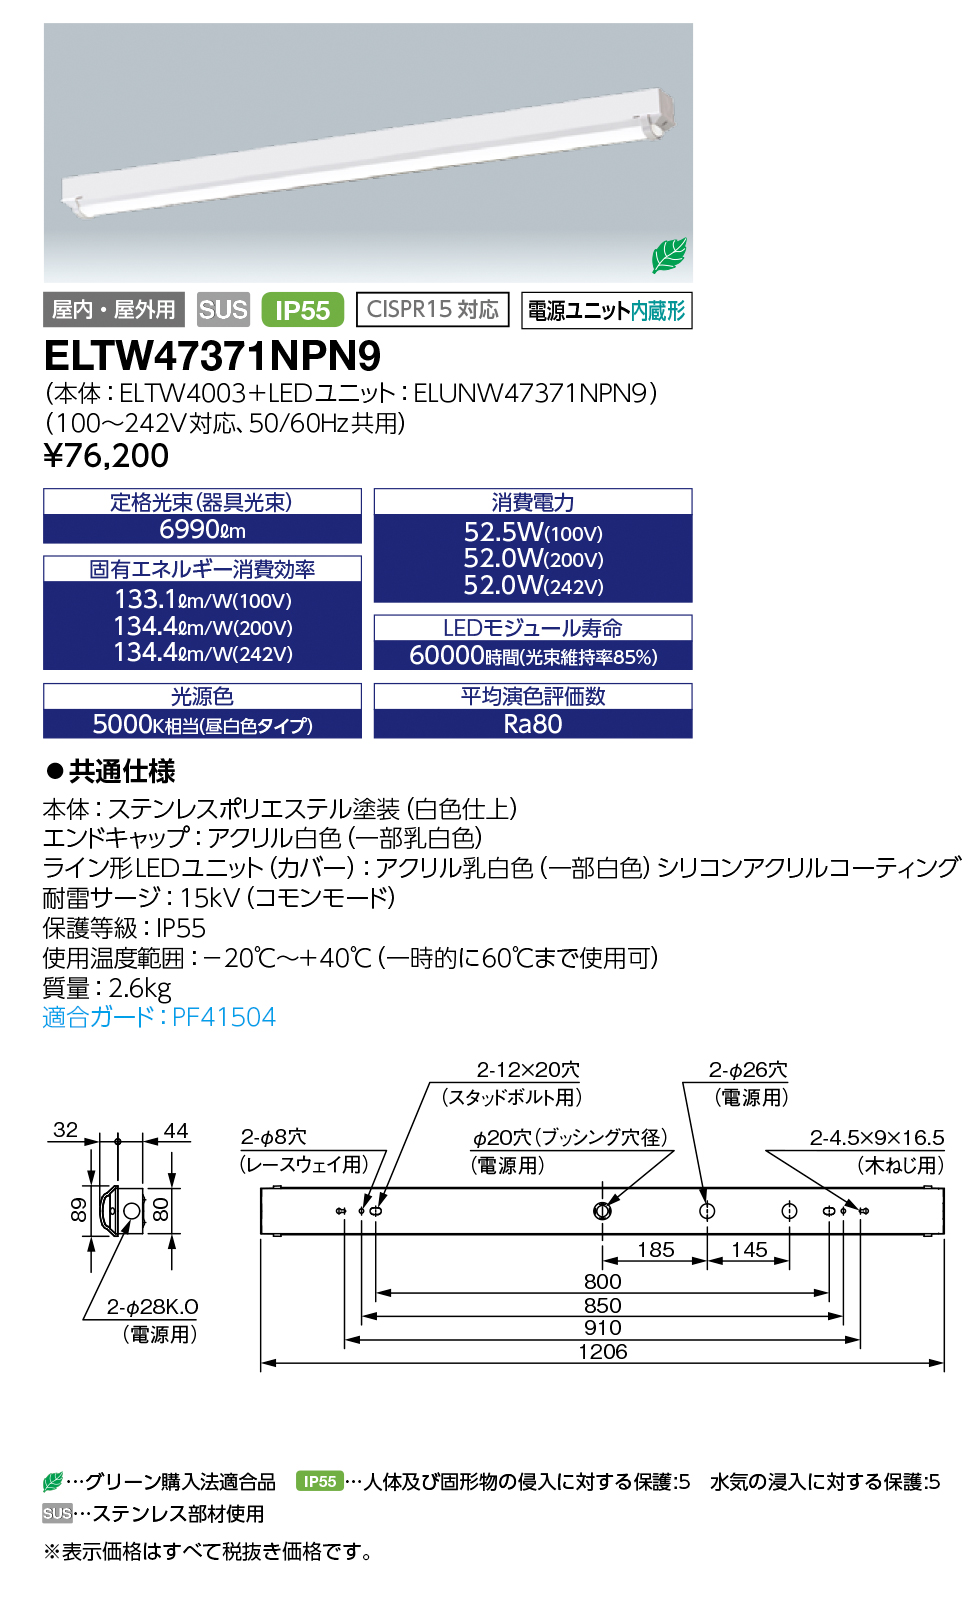 ELTW47371NPN9